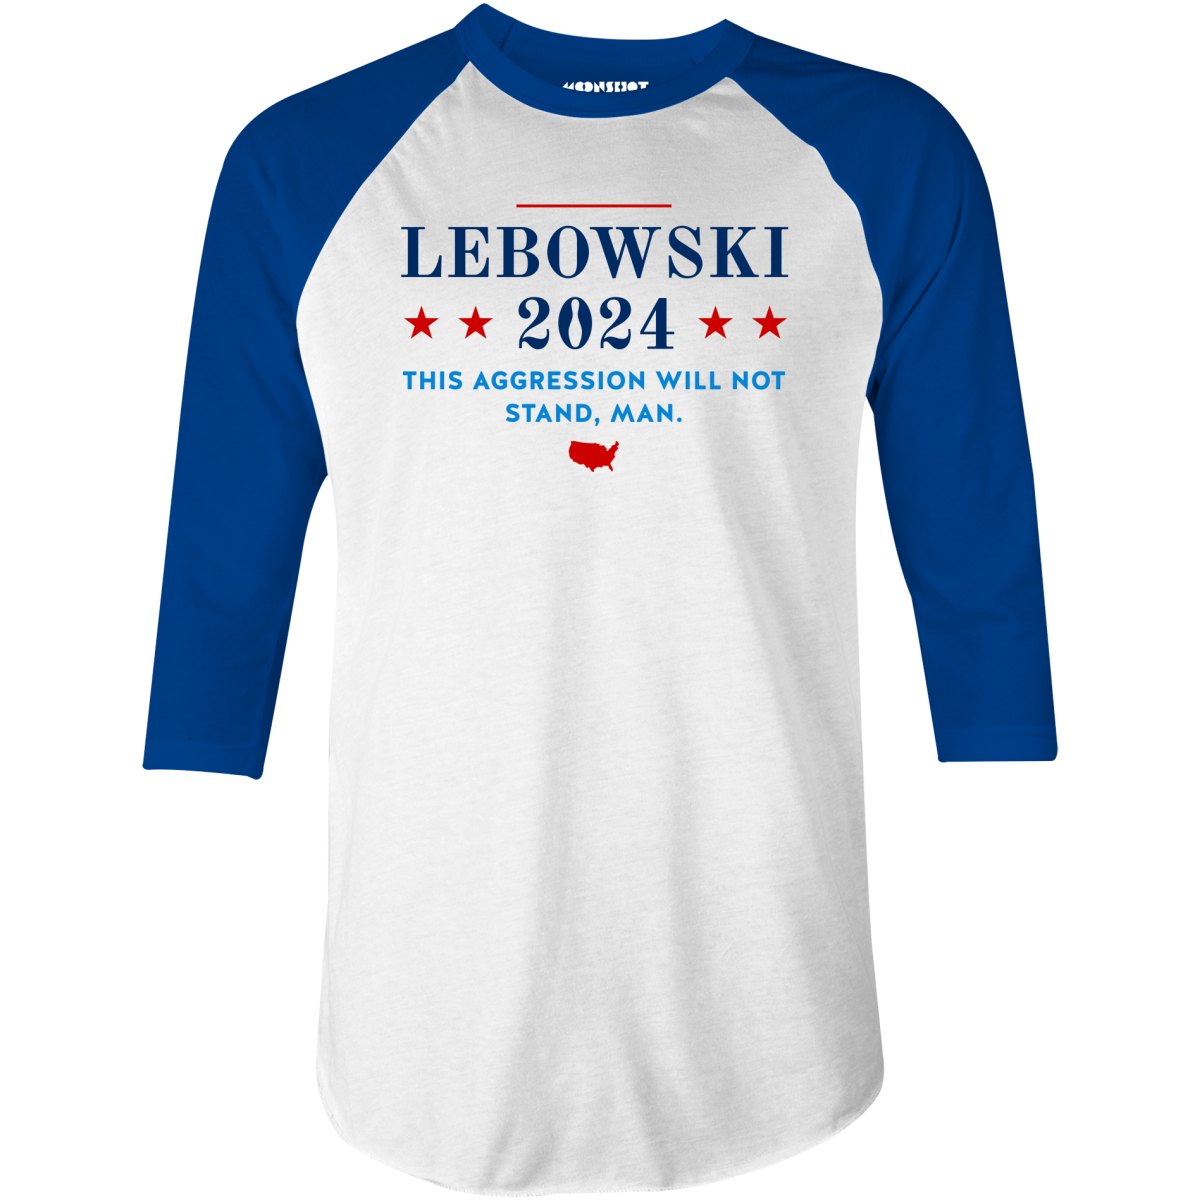 Lebowski 2024 - 3/4 Sleeve Raglan T-Shirt